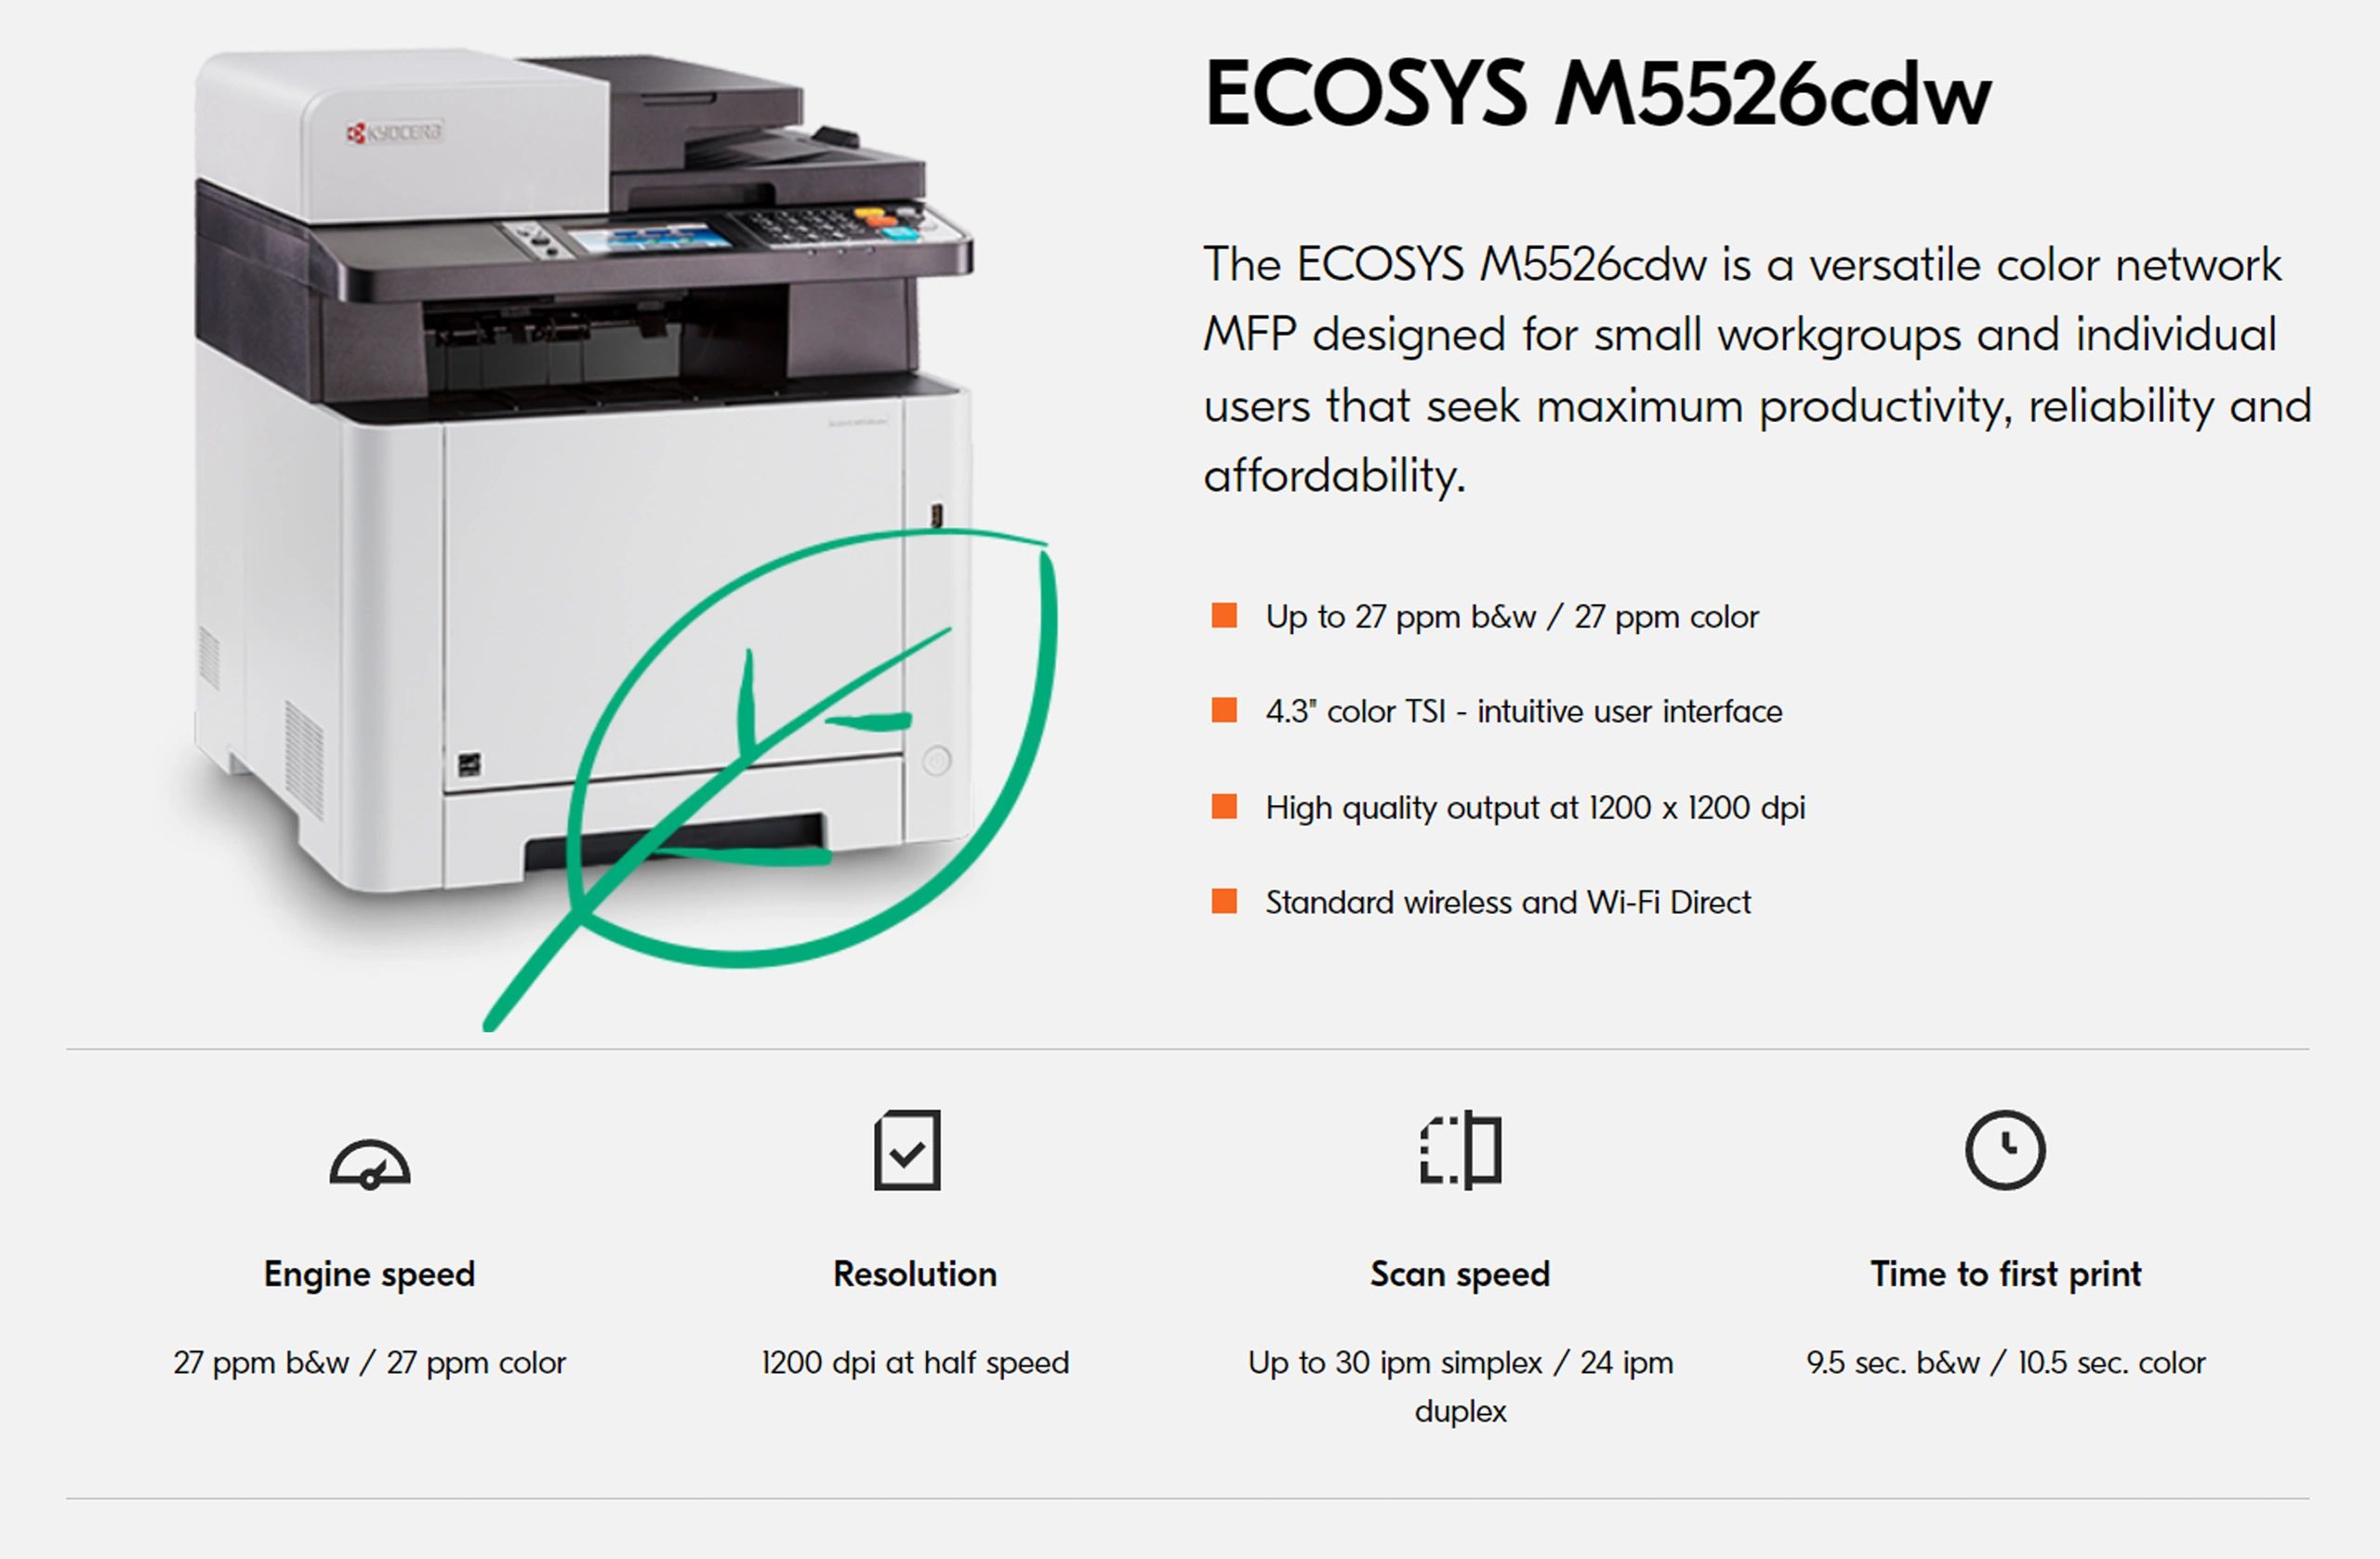 Kyocera Ecosys M5526cdw, Color Network Printer Details